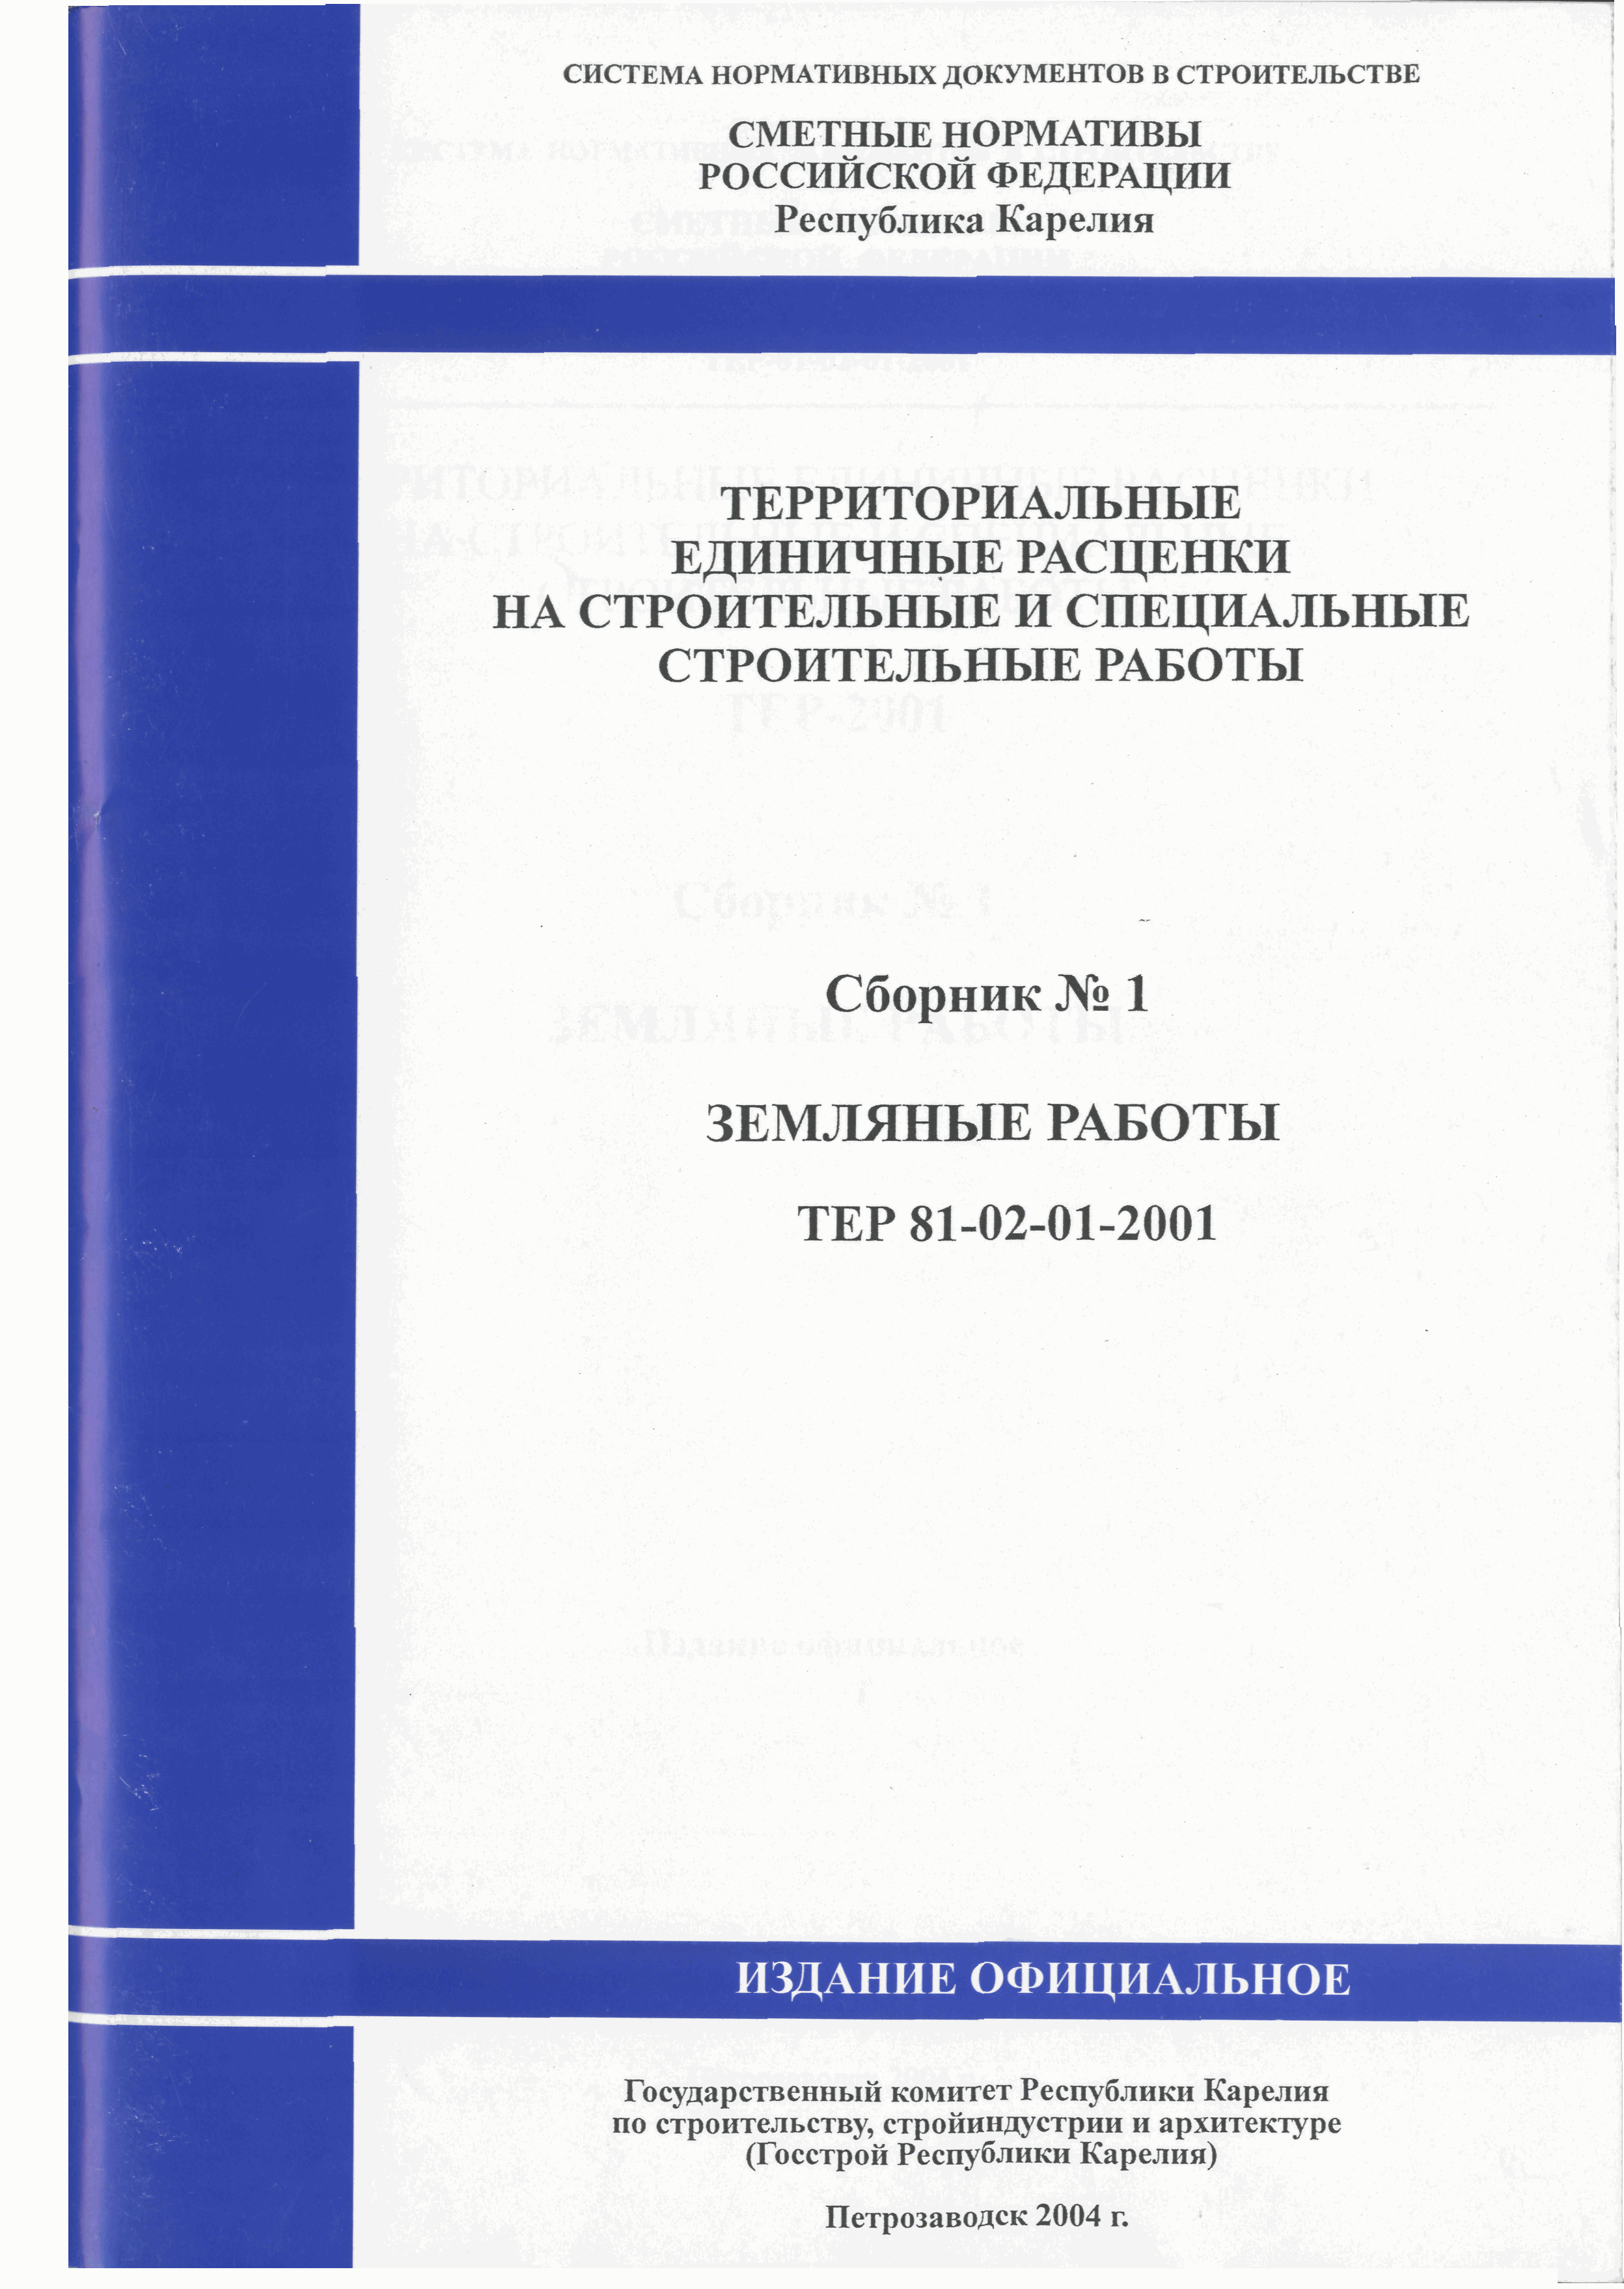 ТЕР Республика Карелия 2001-01